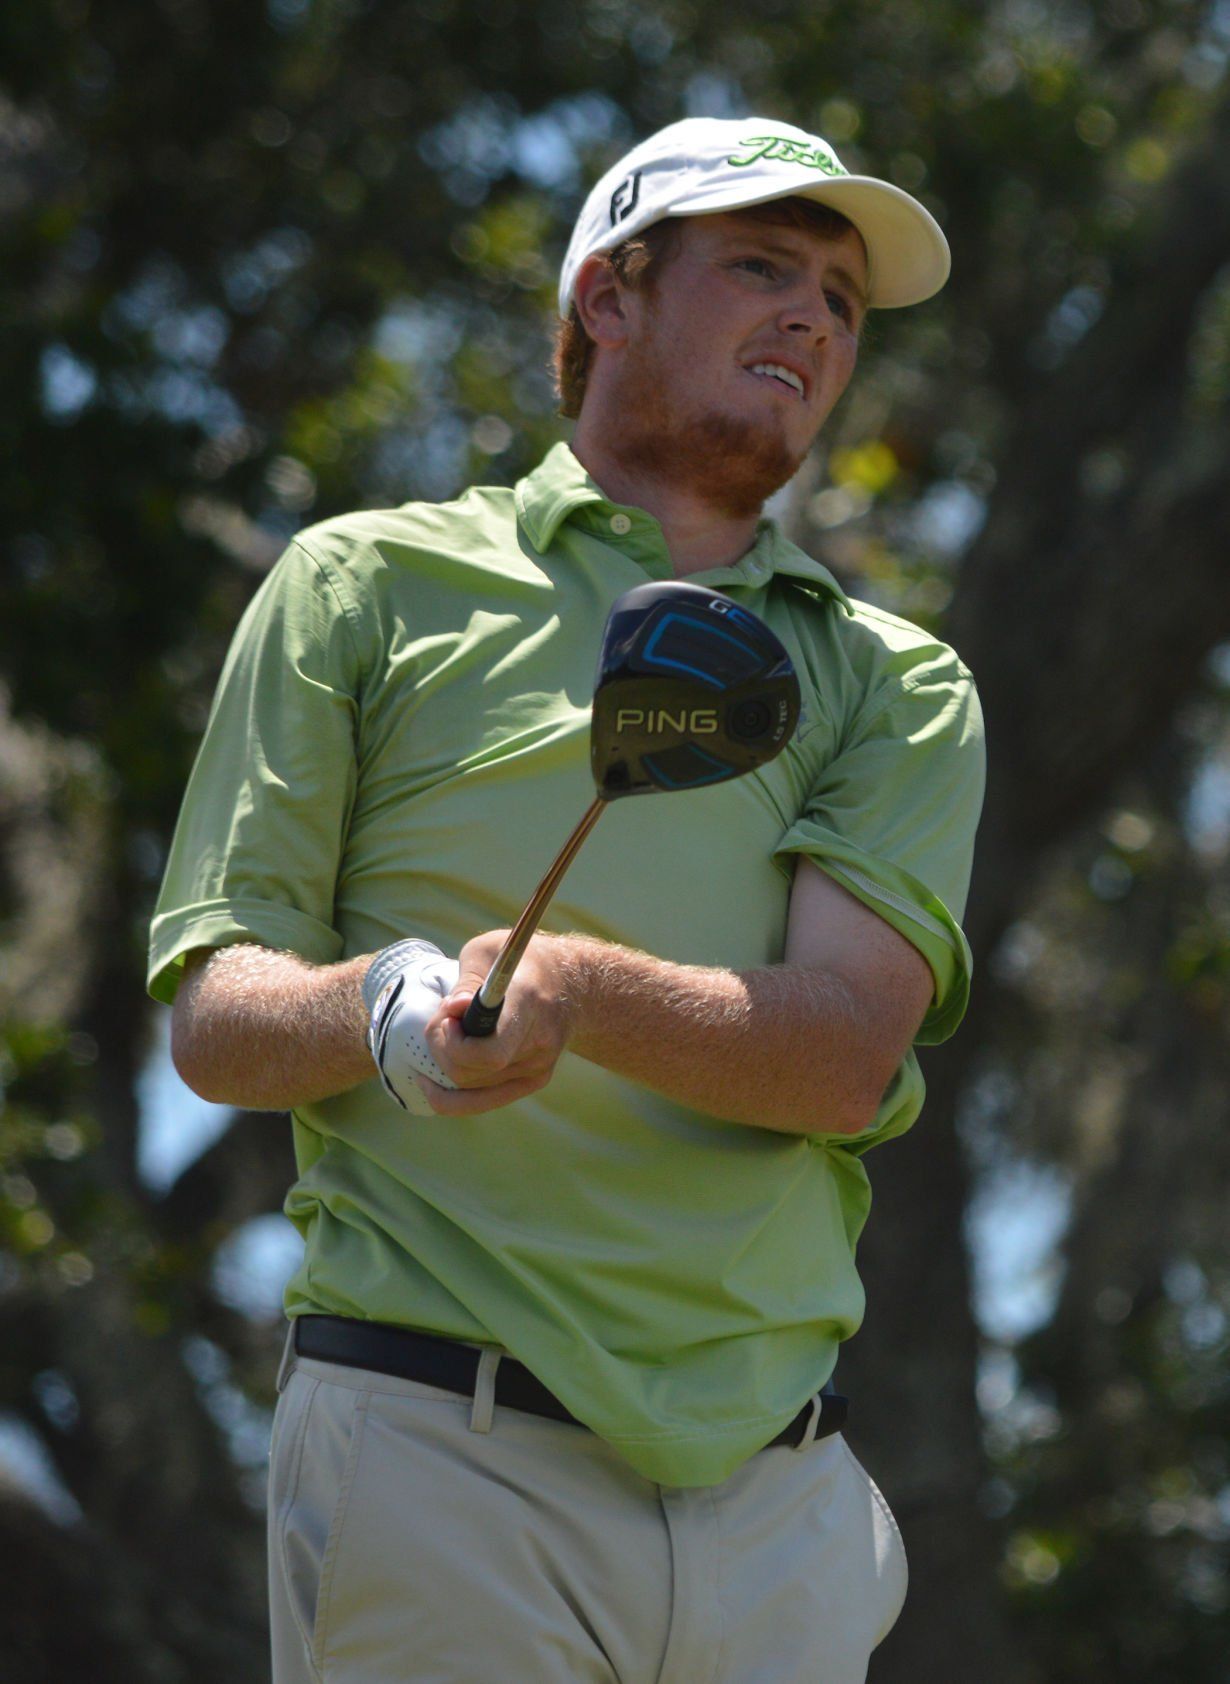 The S. reccomend Carolina amateur golf